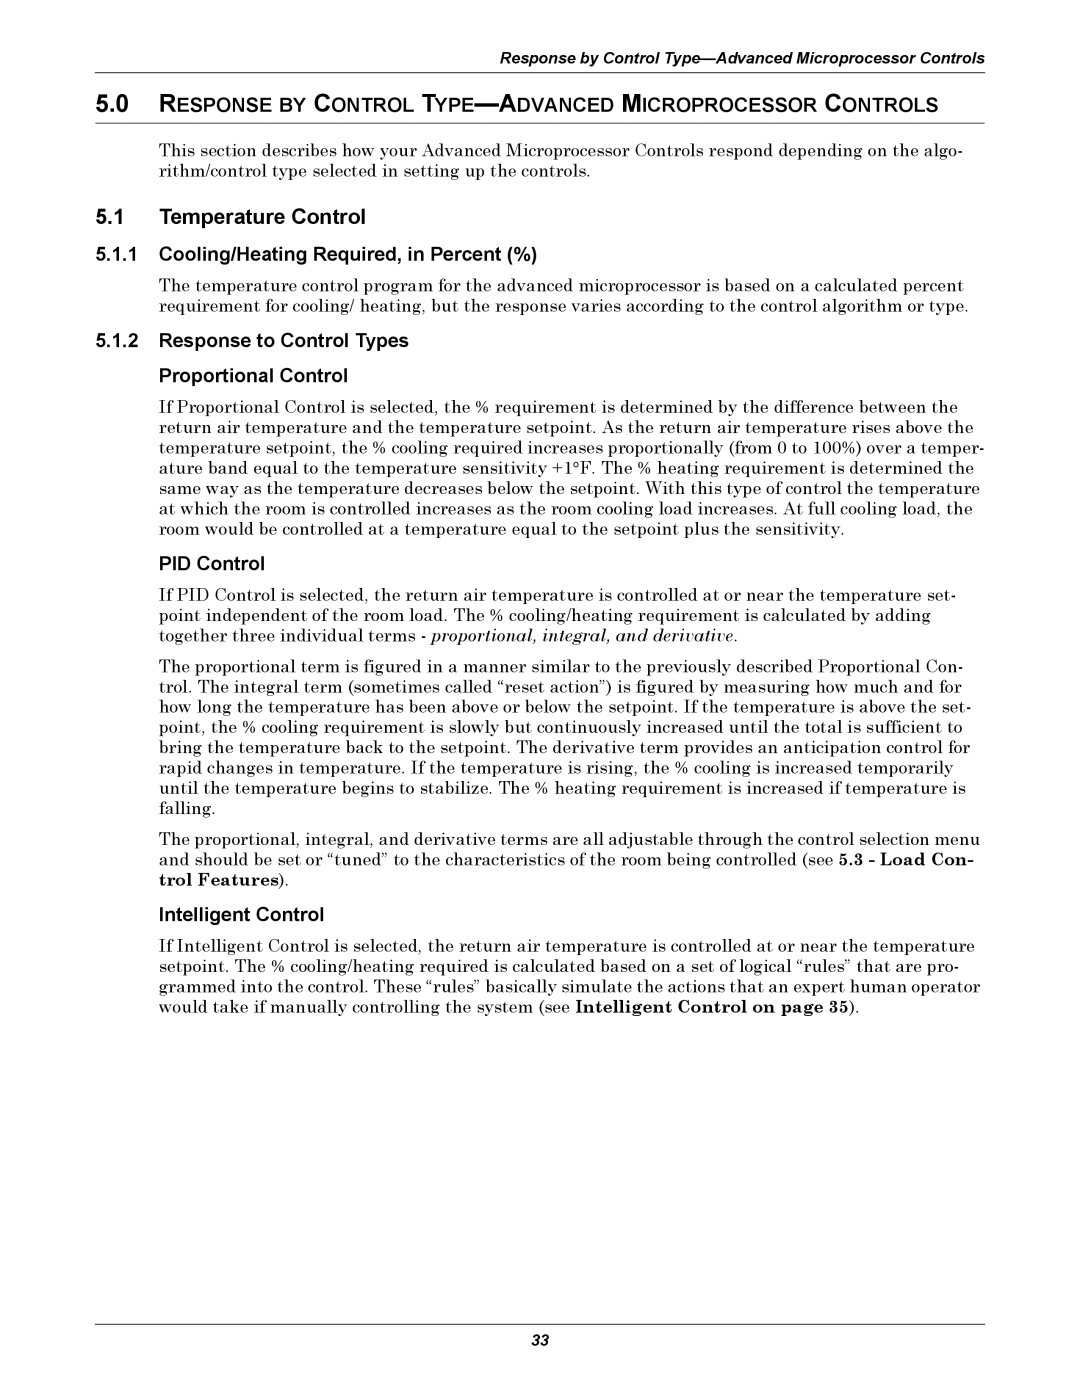 Emerson DE, VH, VE, DH manual Temperature Control, Response by Control TYPE-ADVANCED Microprocessor Controls 